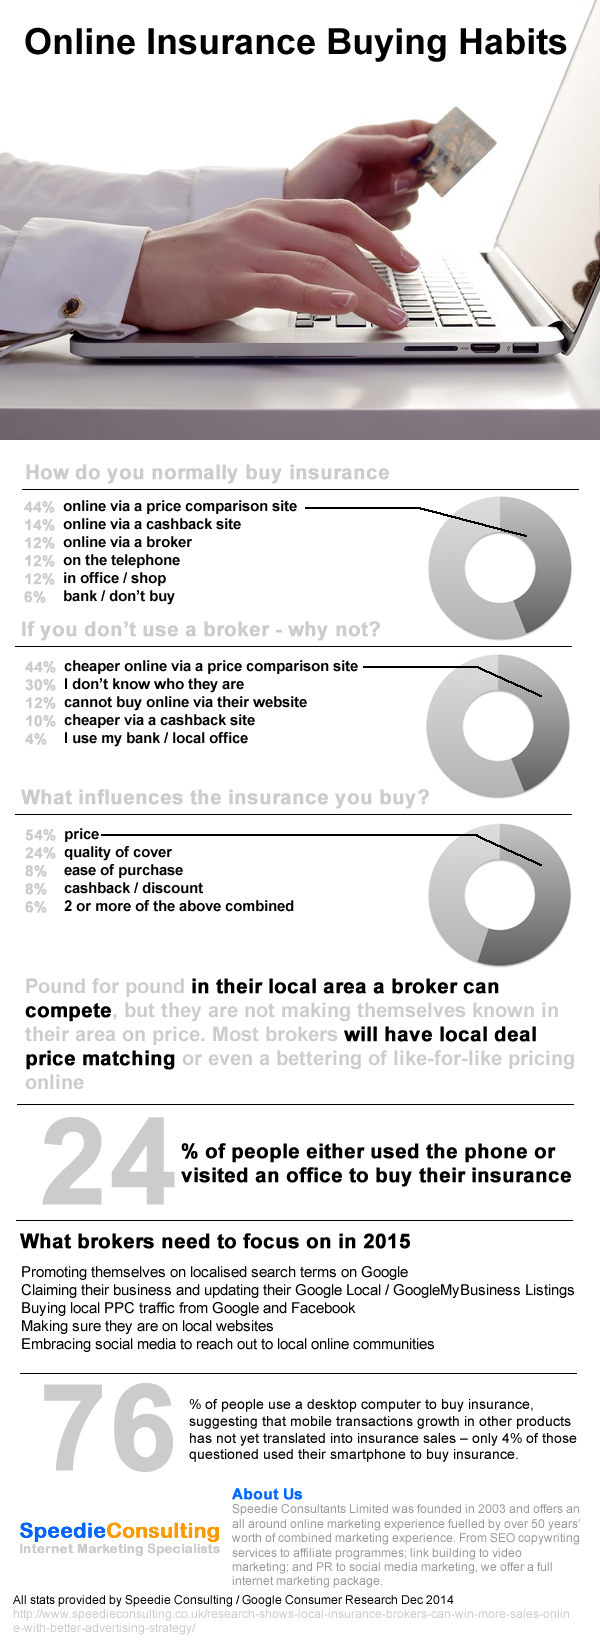 online buying habits infographic